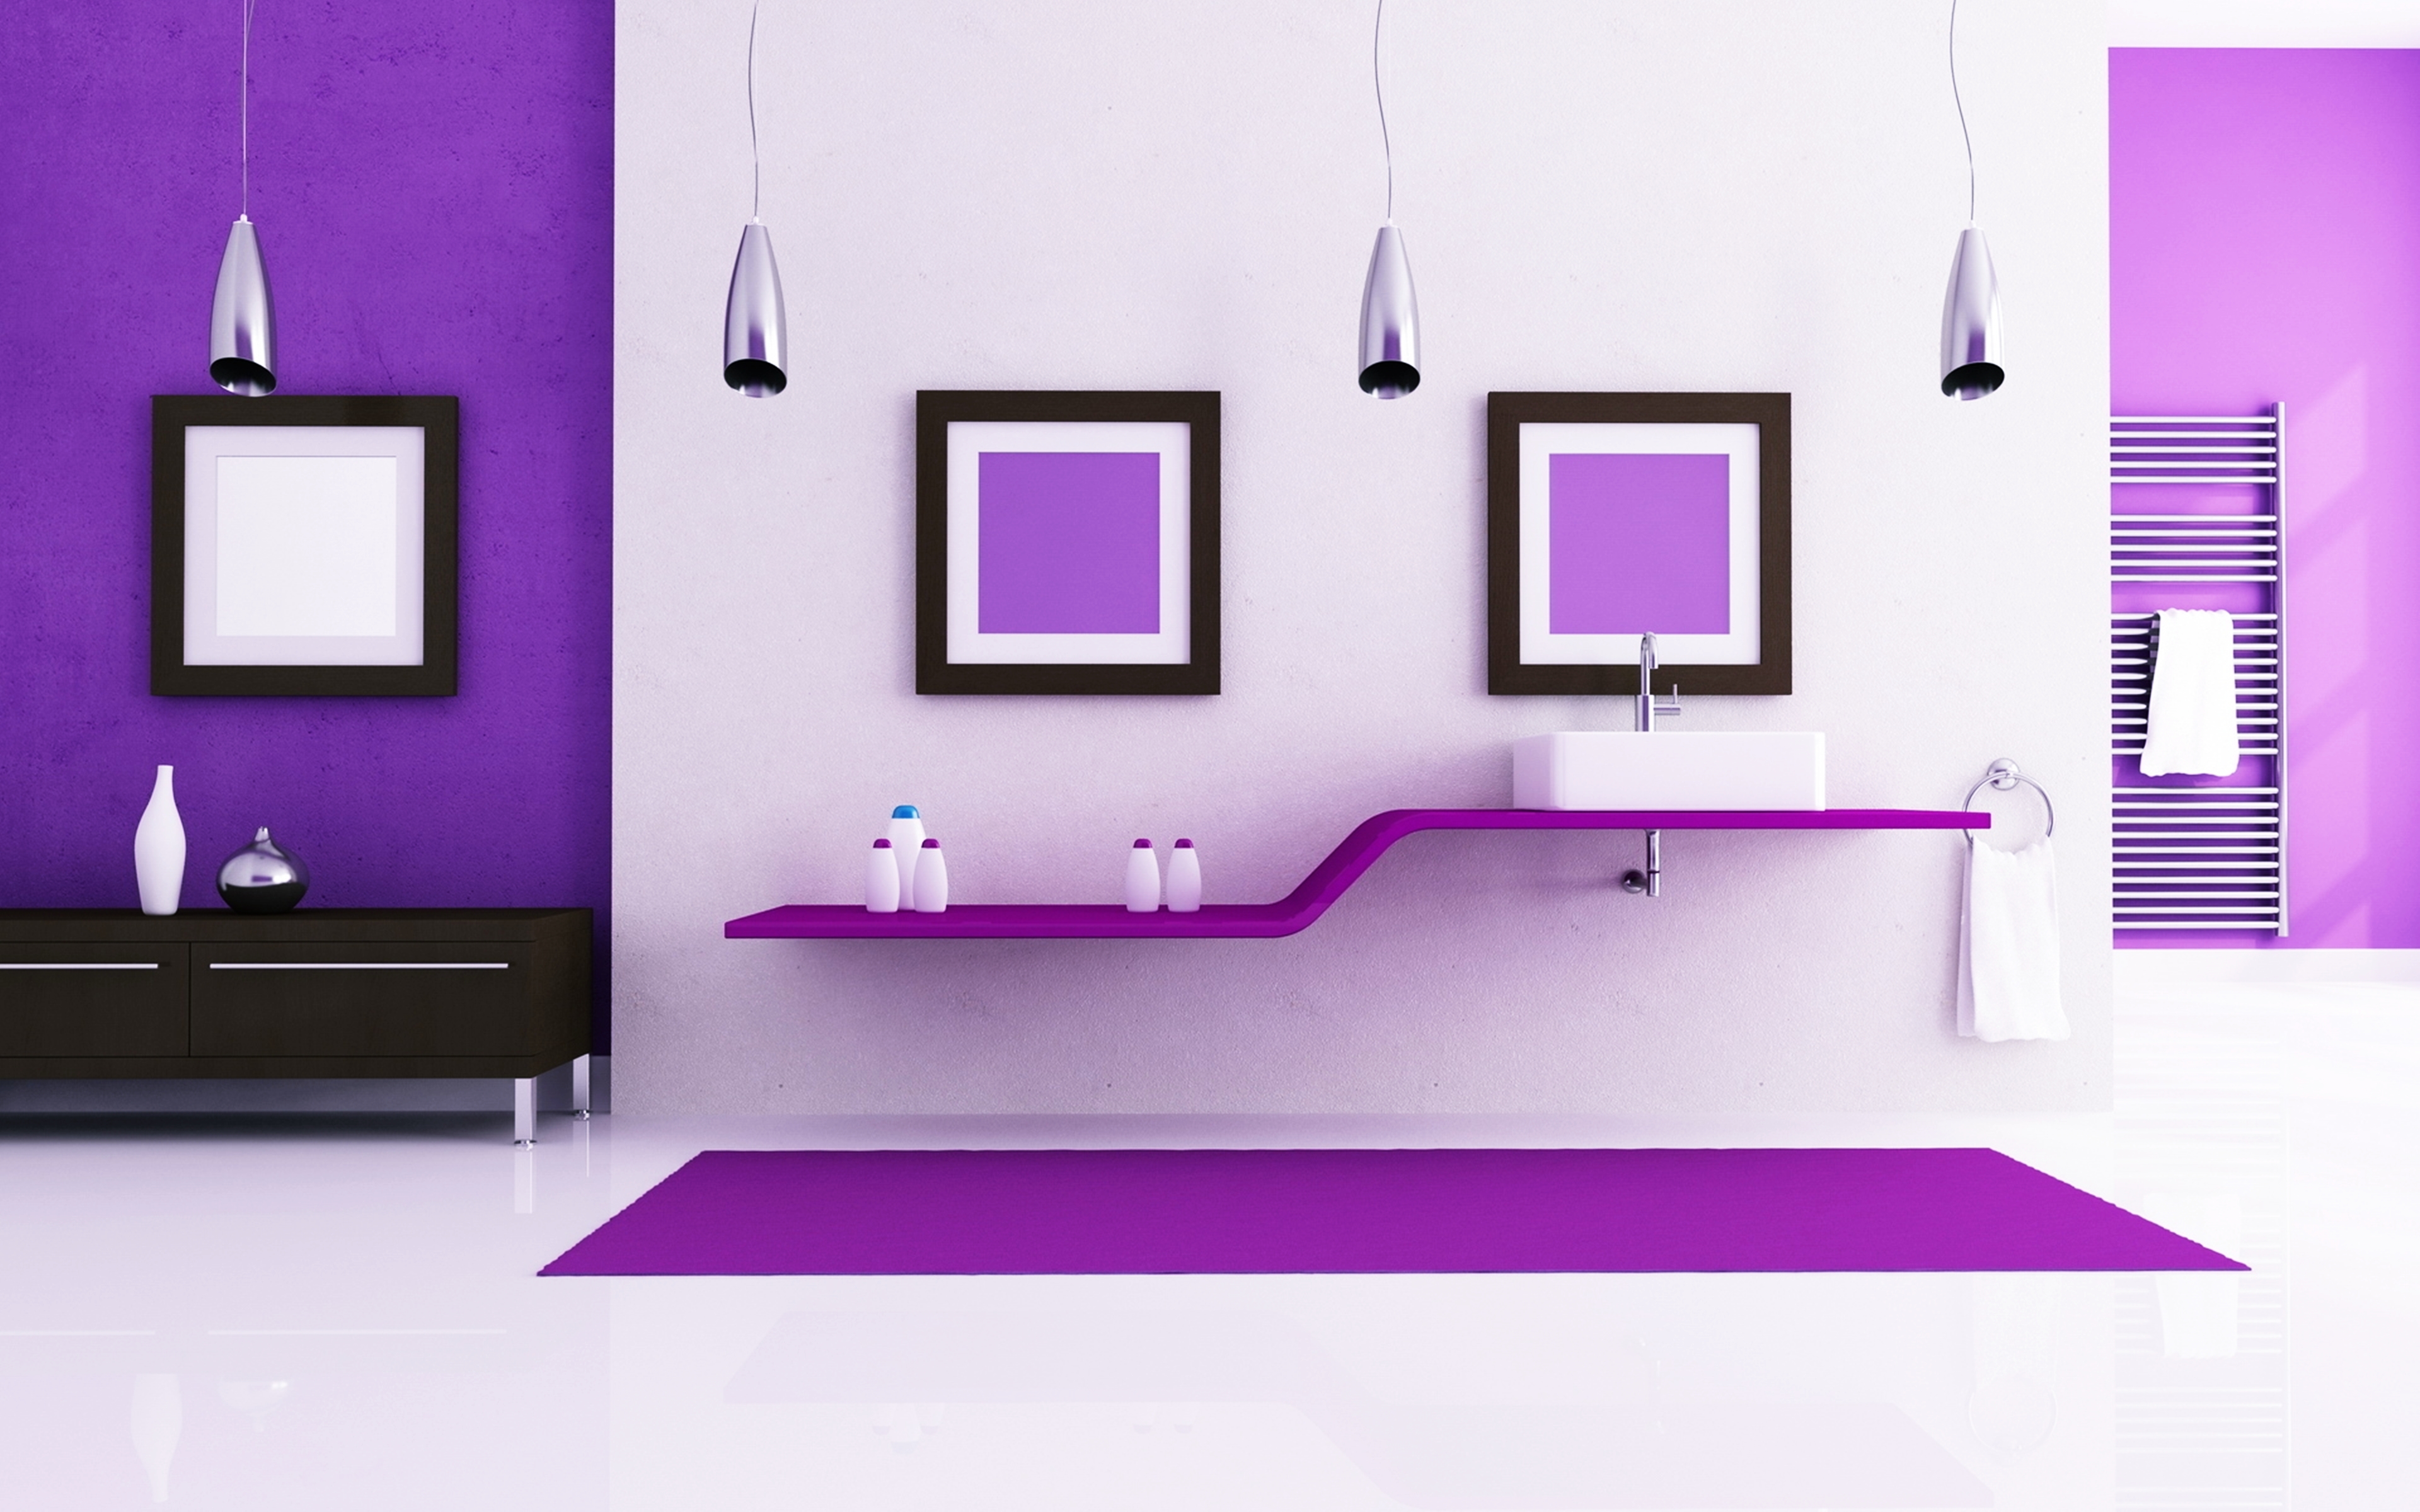 design, interior, room, man made, bathroom, purple